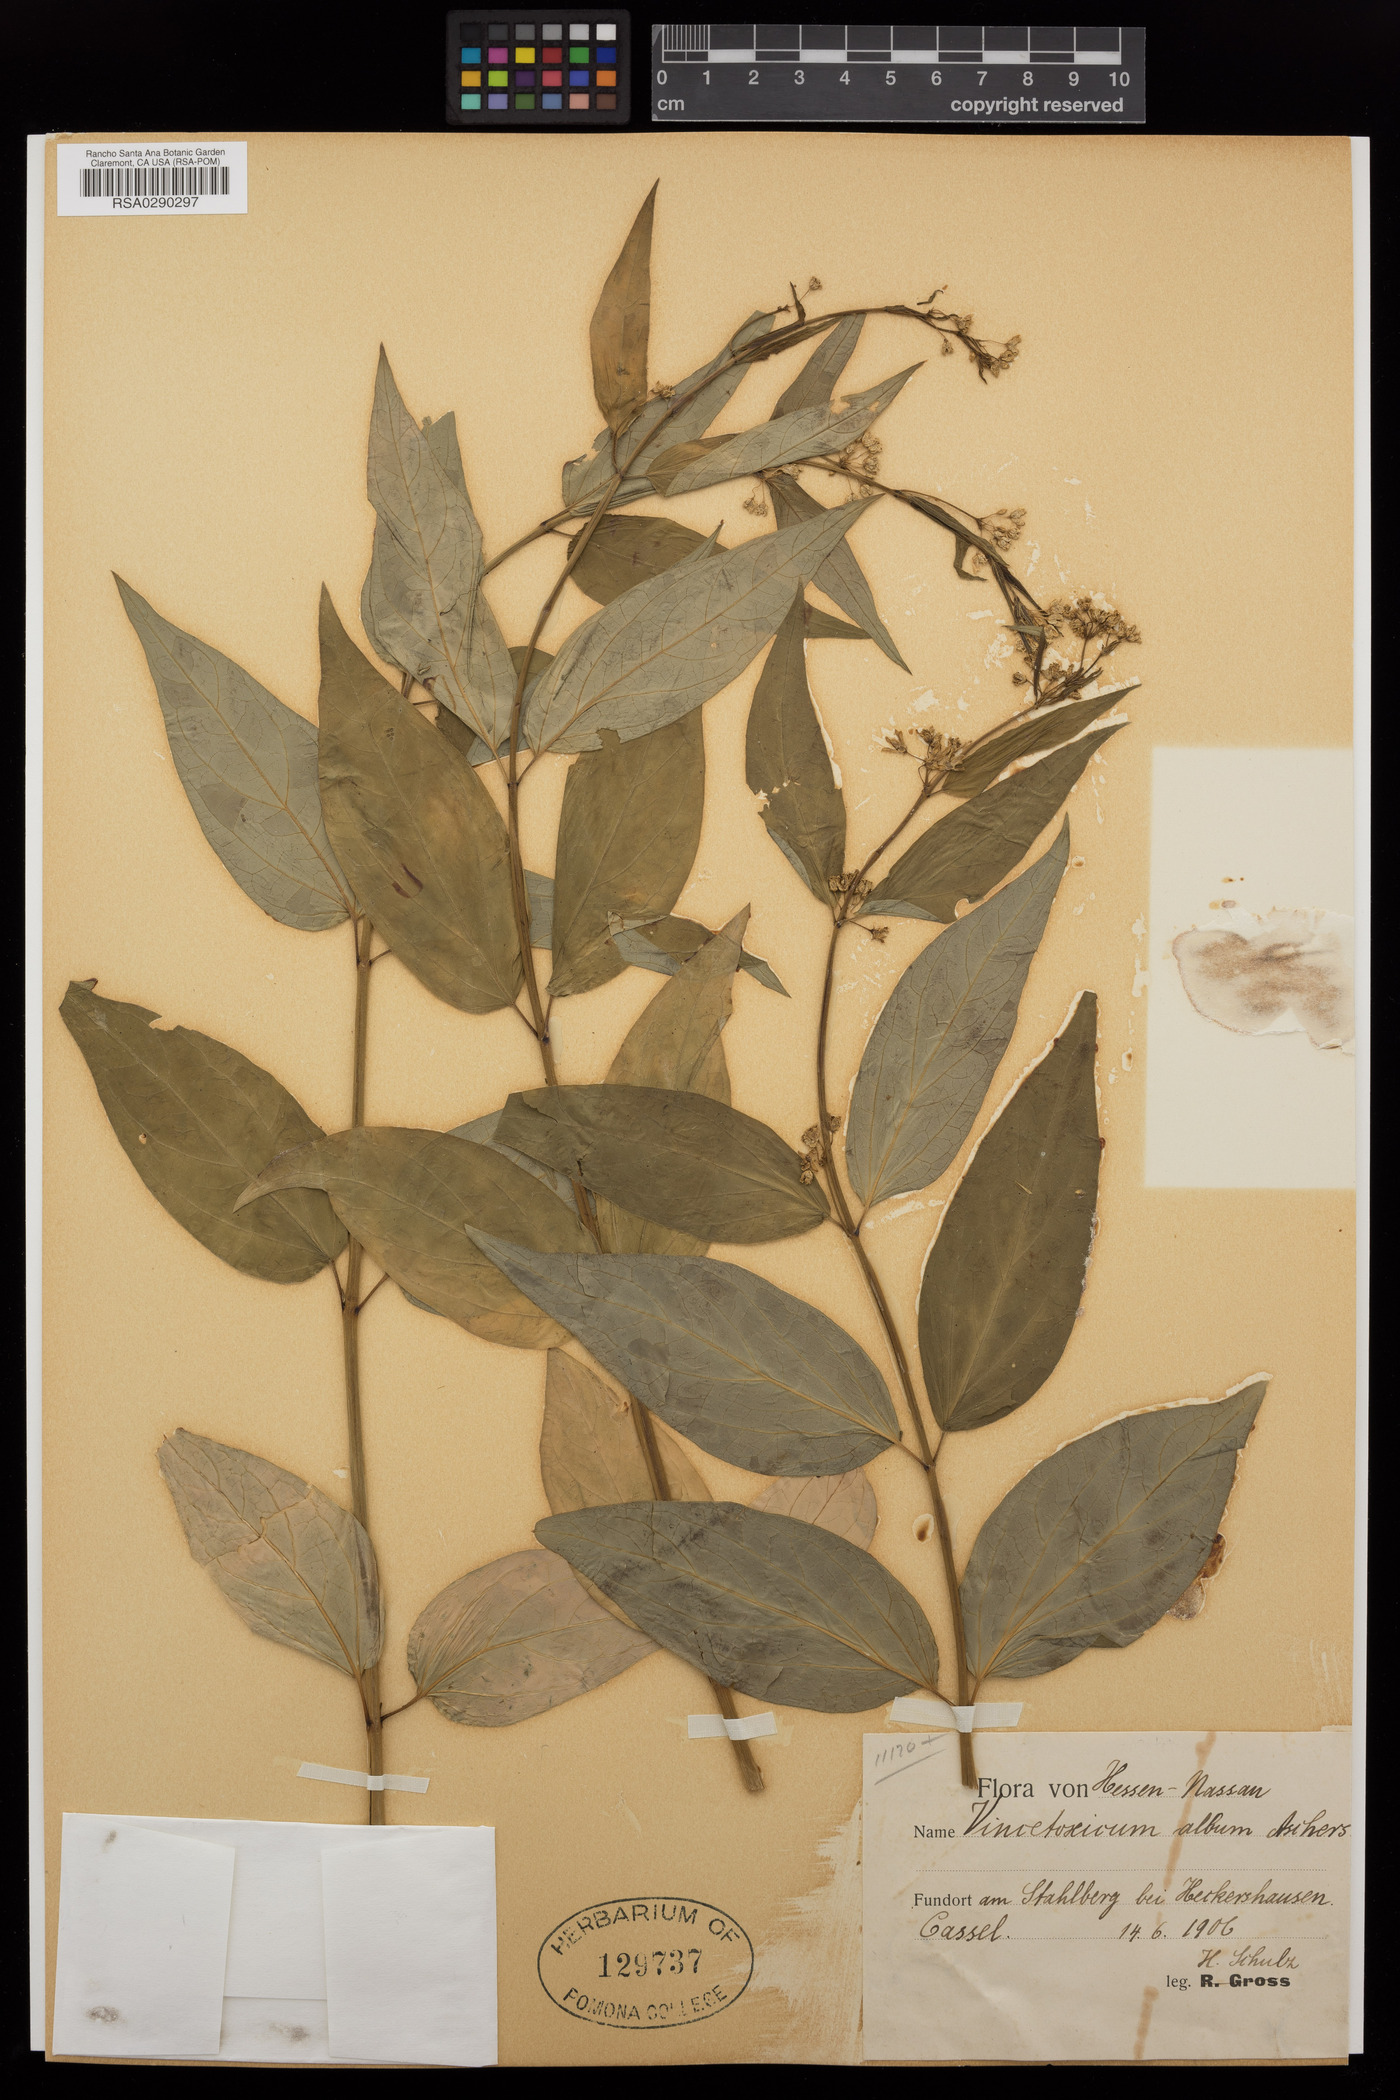 Vincetoxicum hirundinaria subsp. hirundinaria image